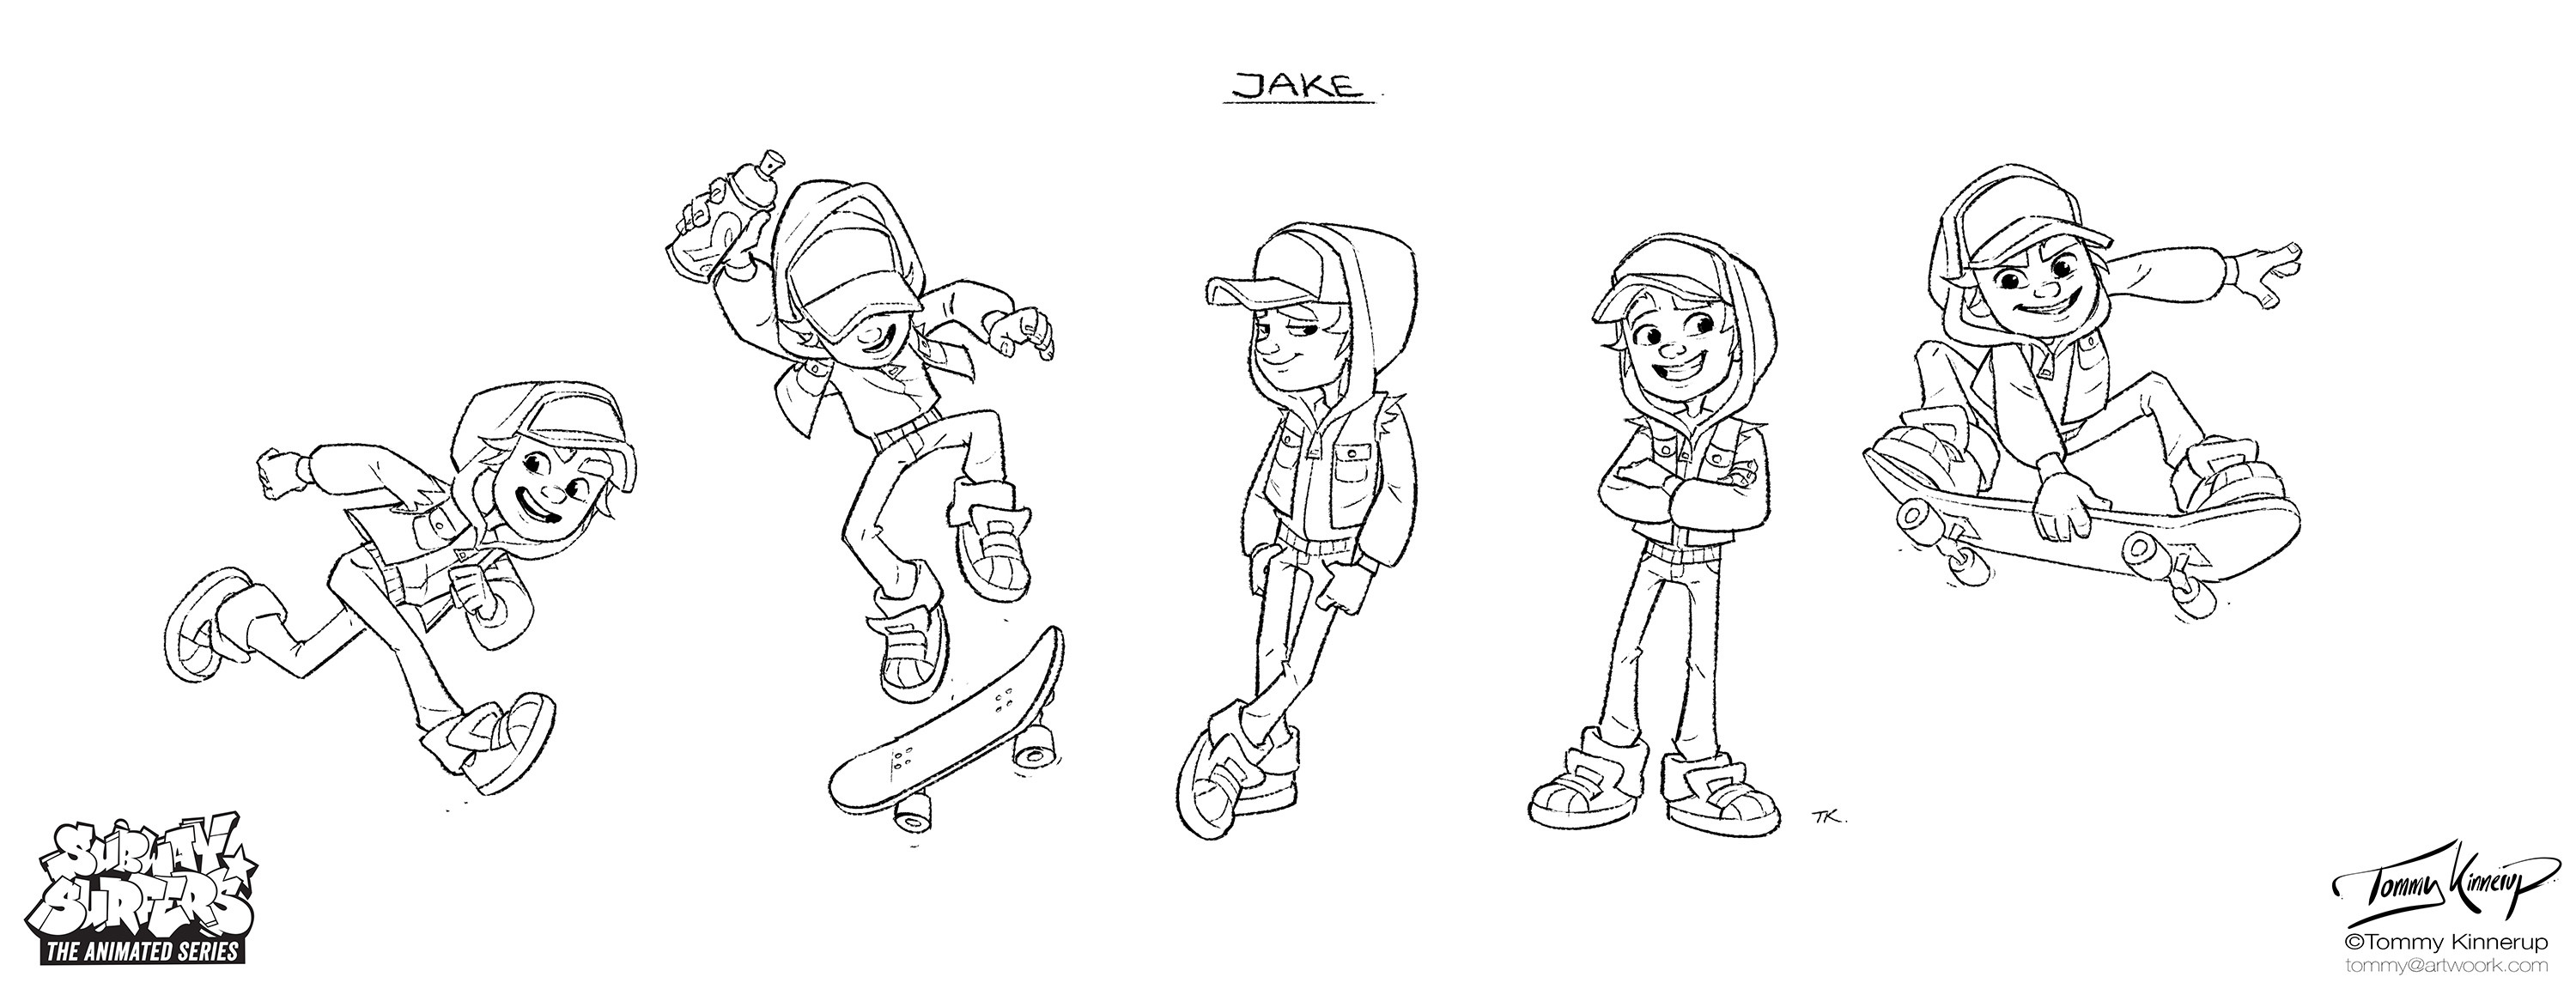 ArtStation - Jake Subway Surfer